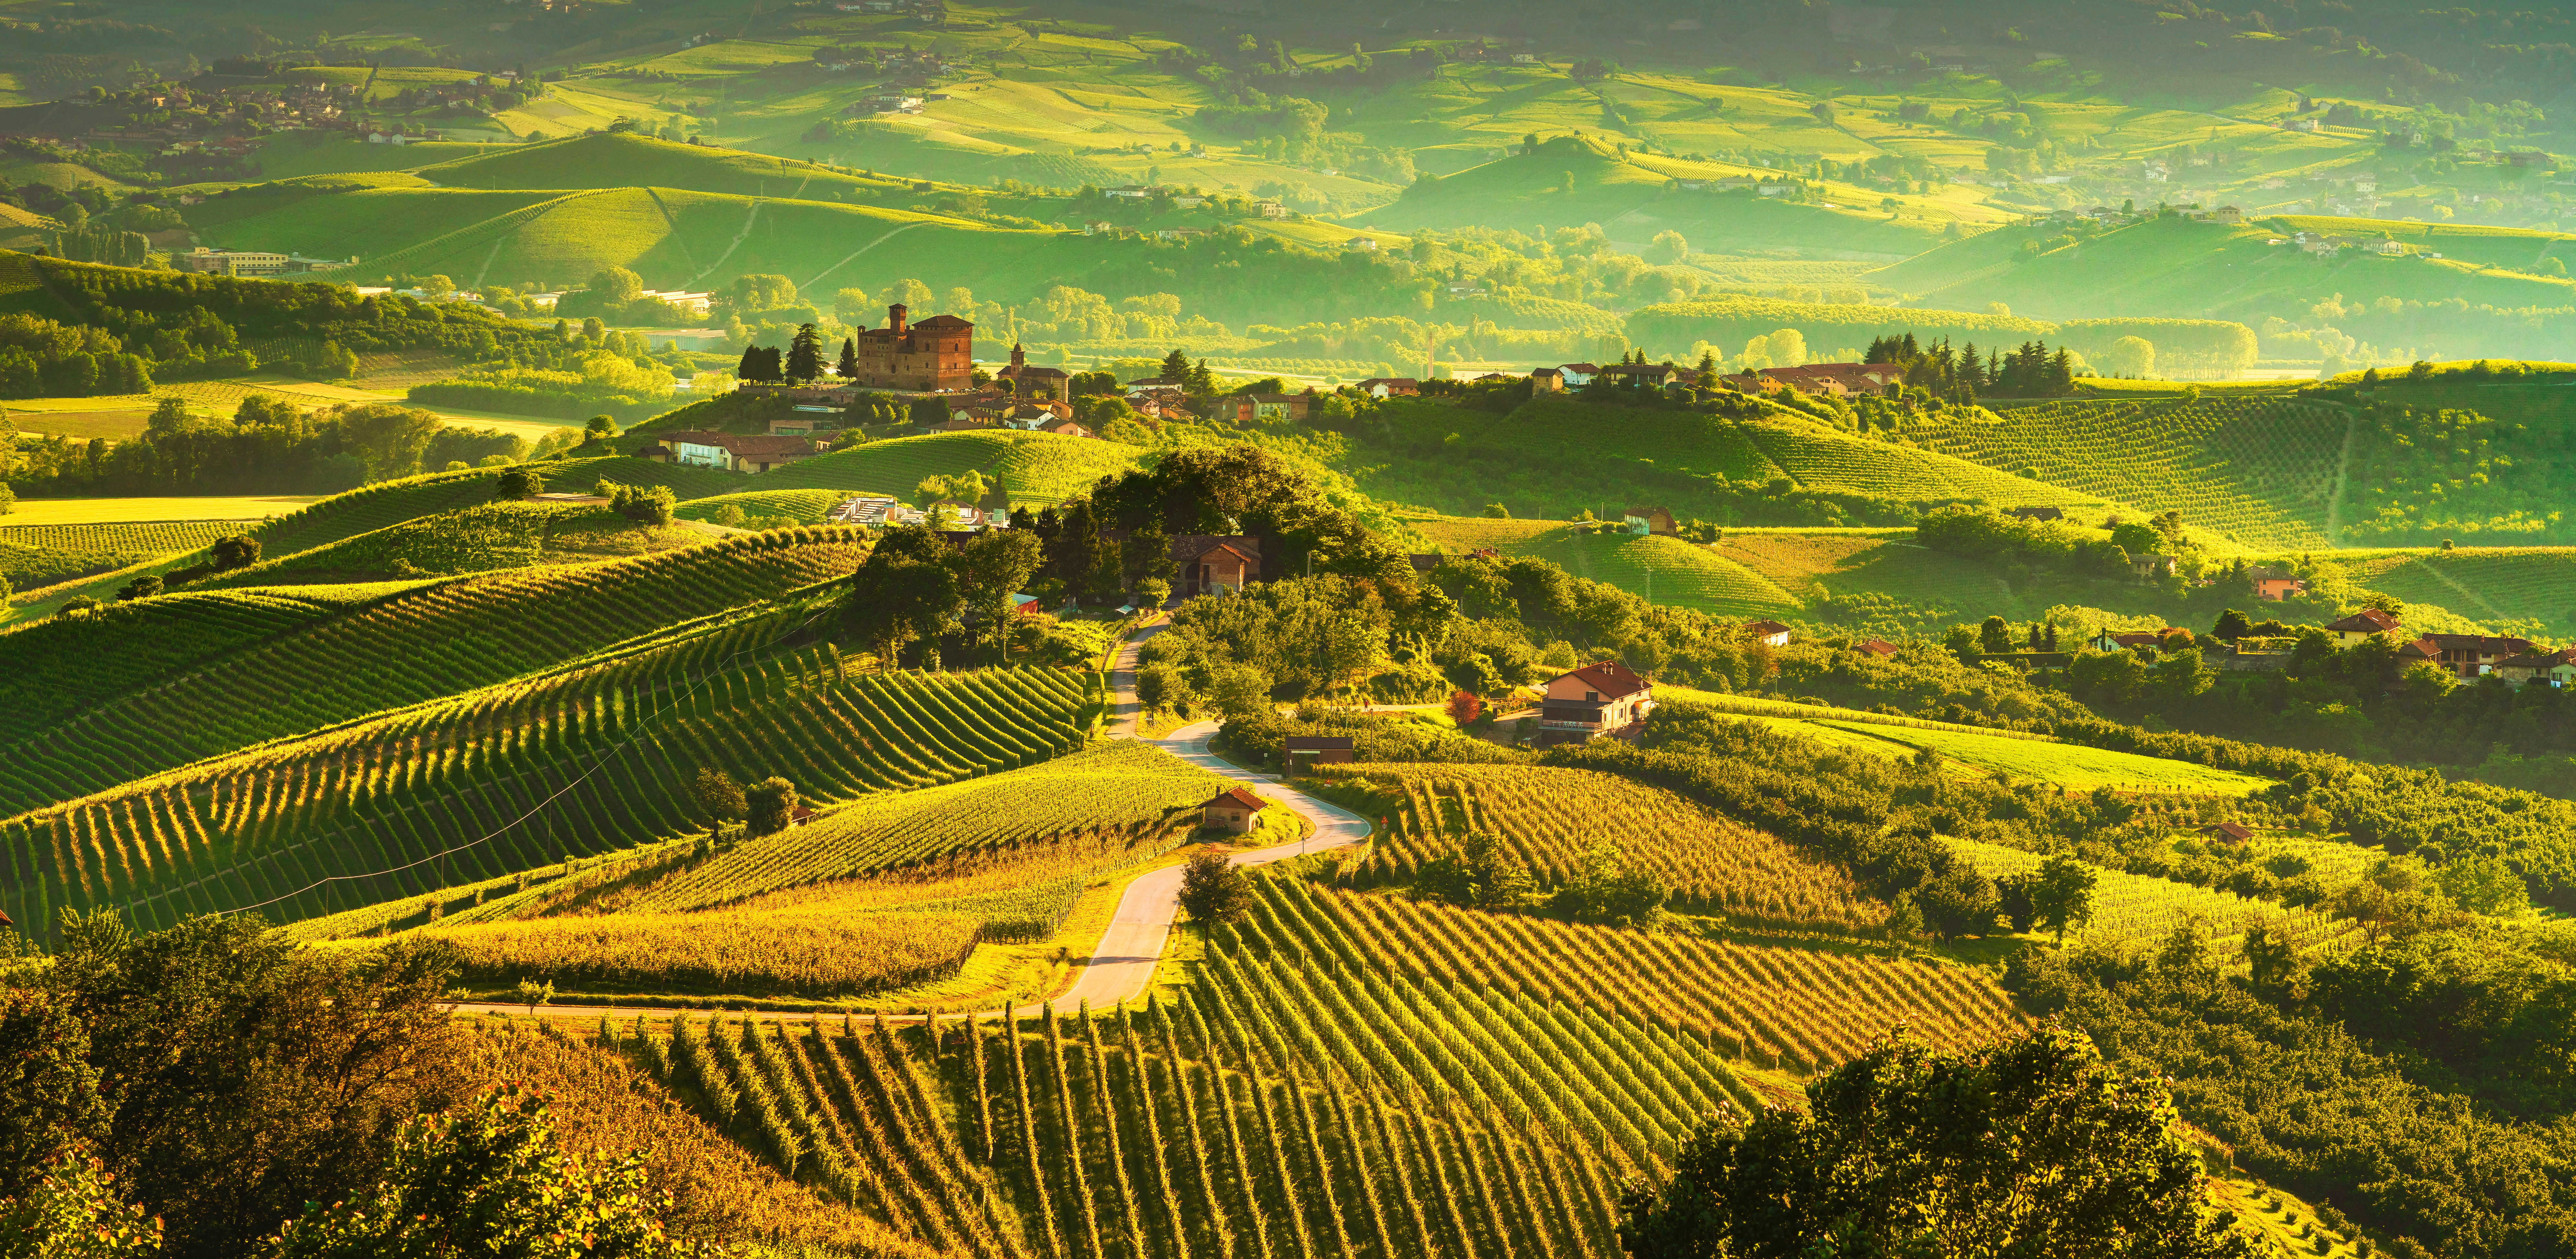 Turin vineyard